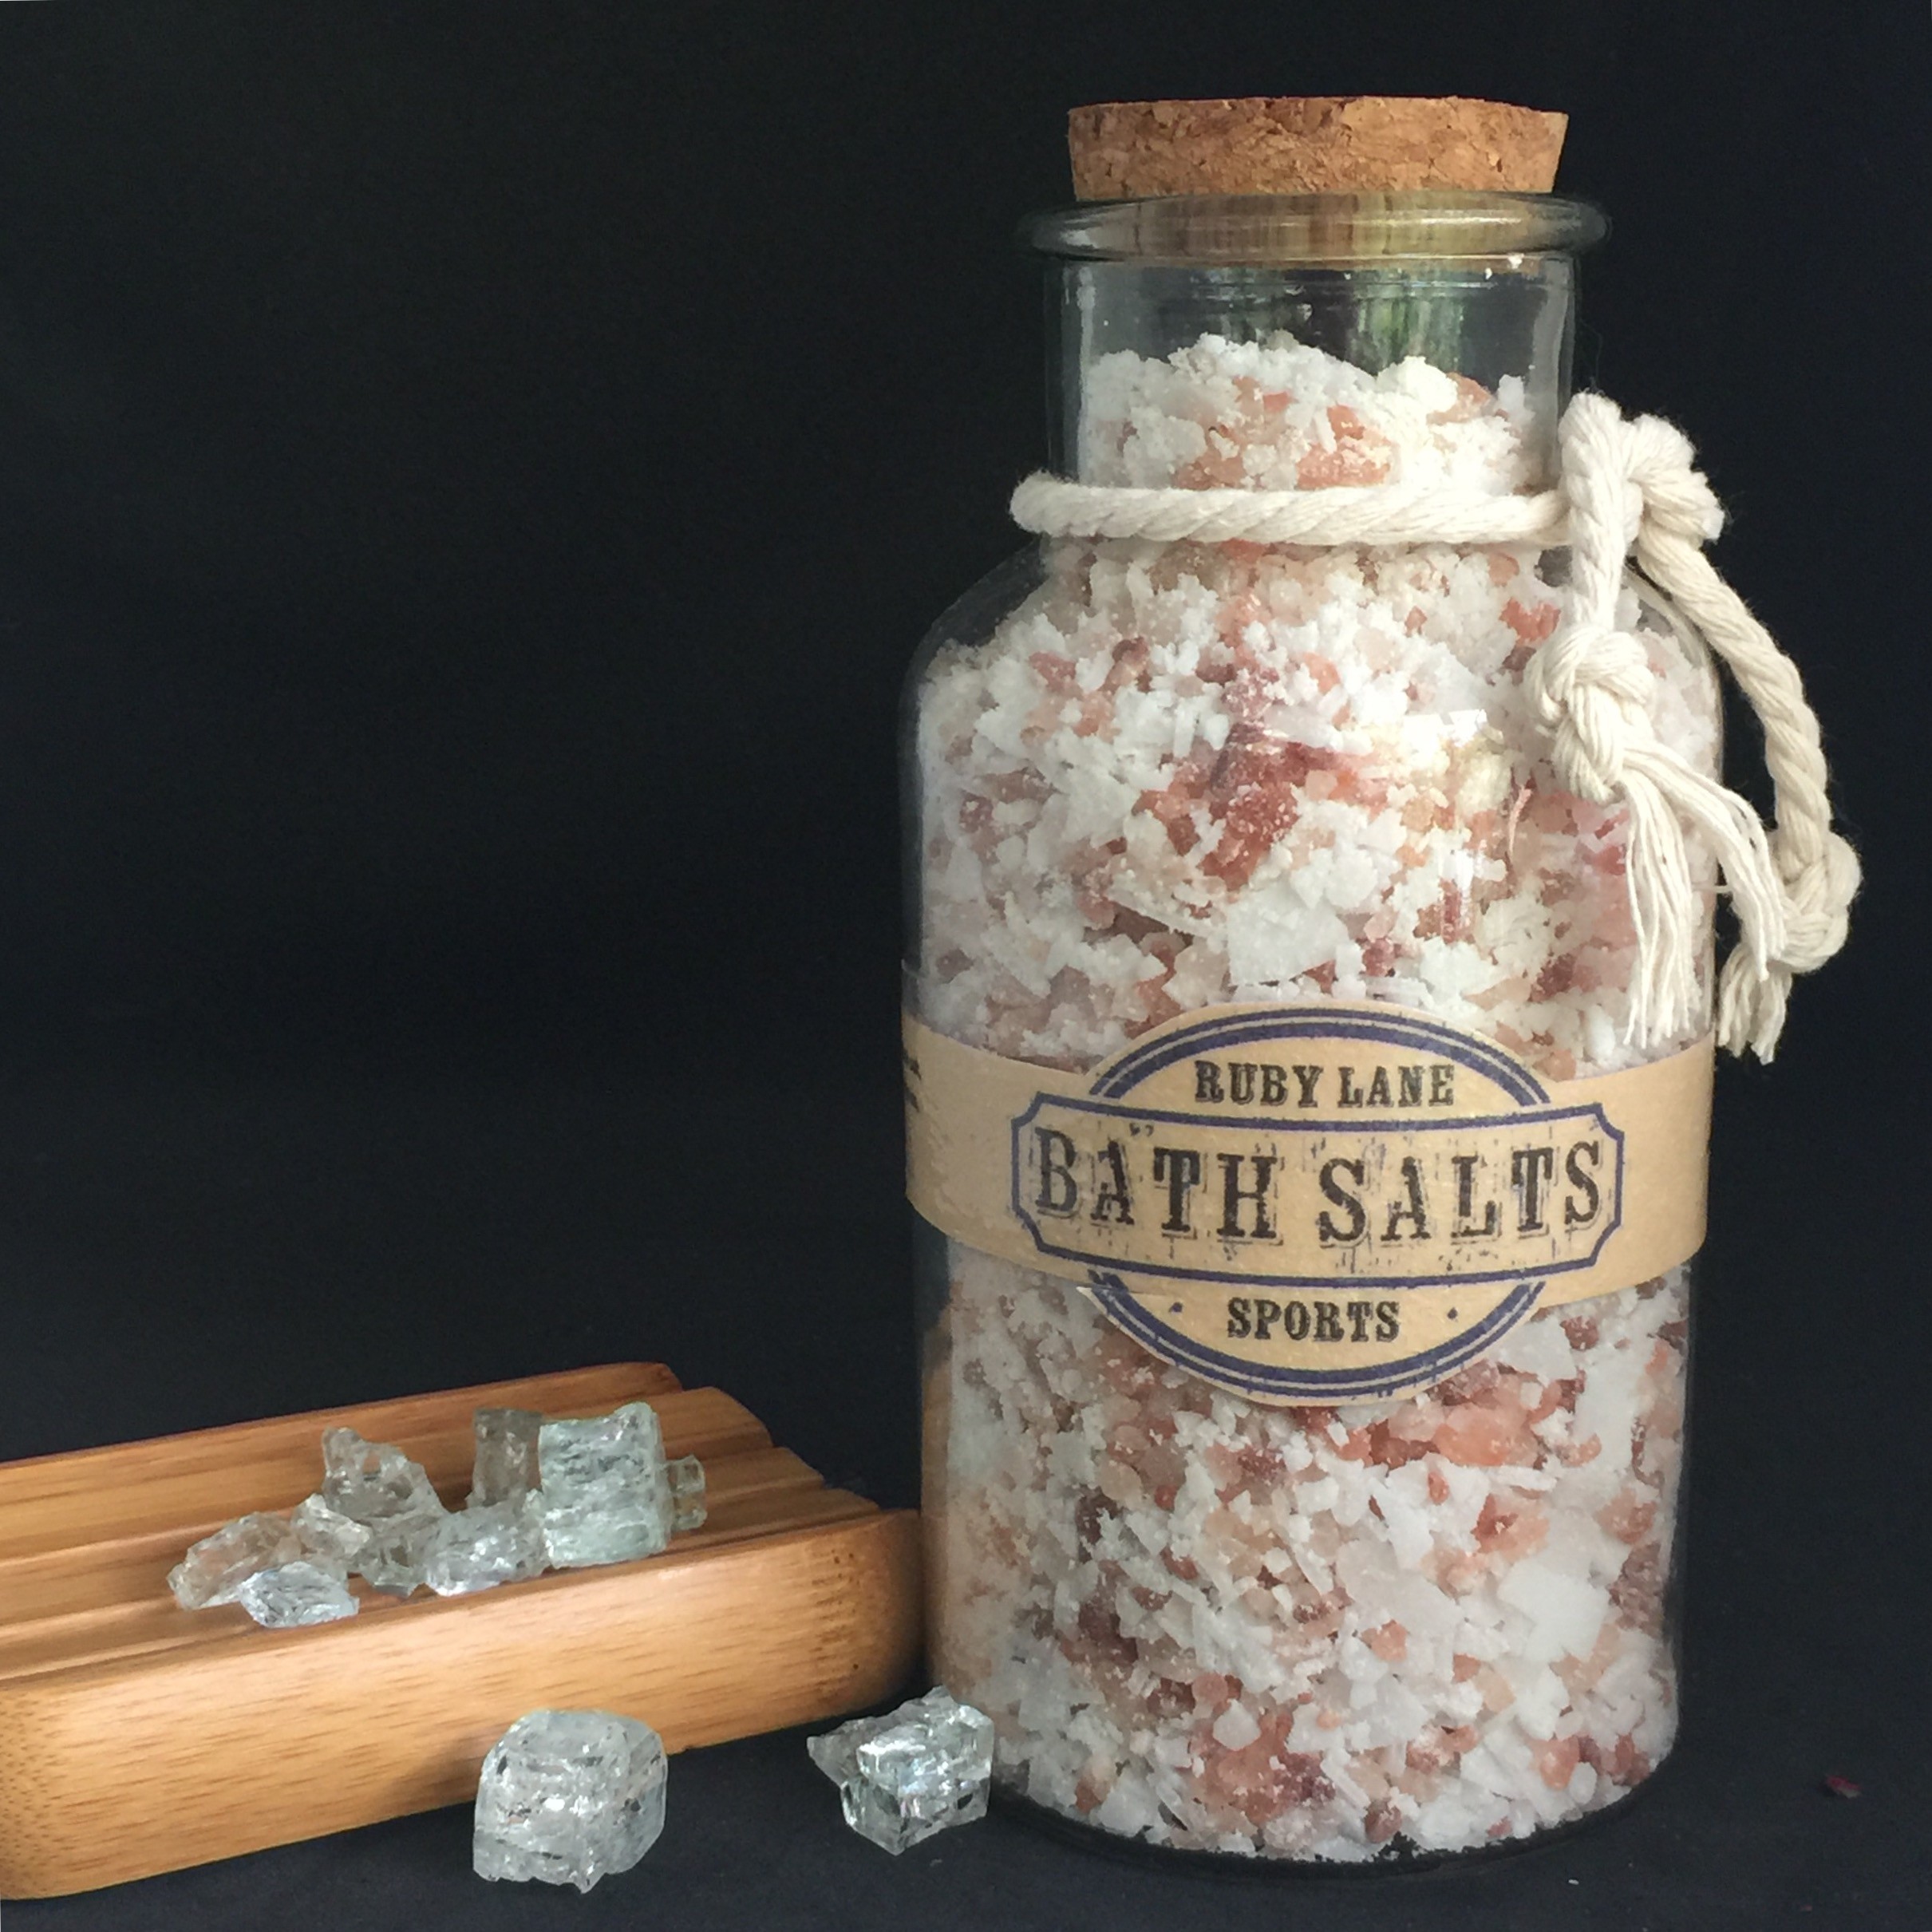 Bath Salts - Sports